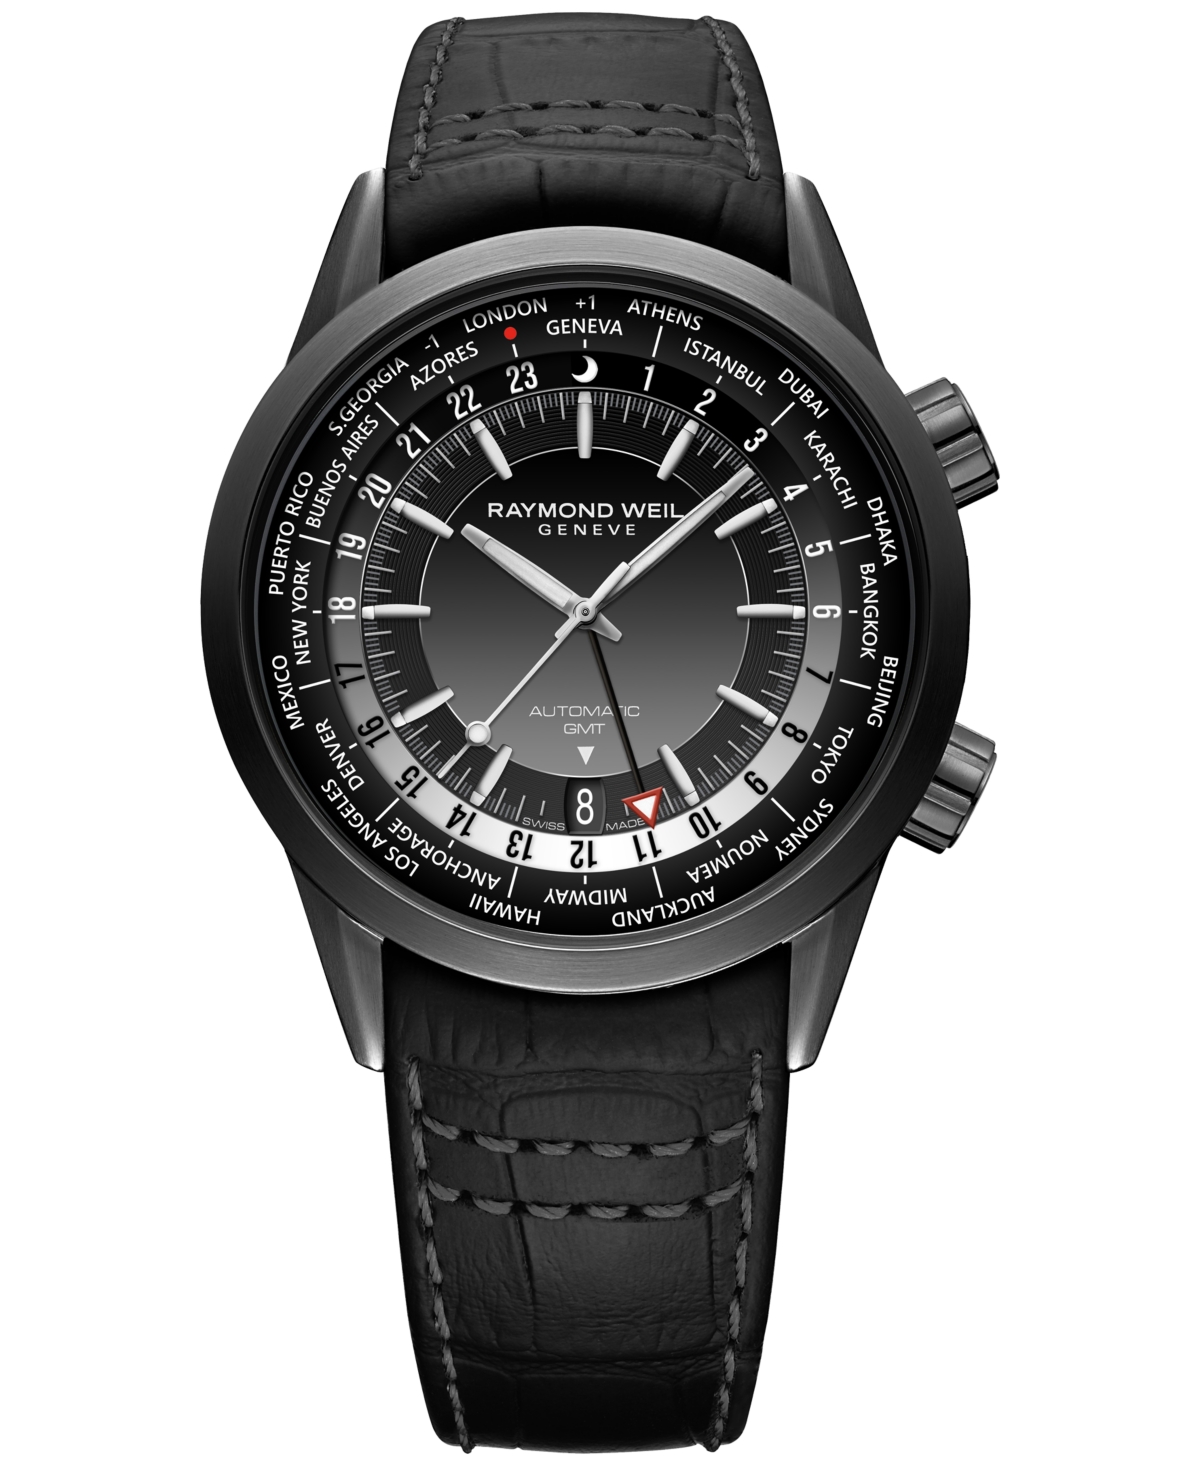 Raymond Weil Men's Swiss Automatic Freelancer Gmt Black Leather Strap Watch 41mm